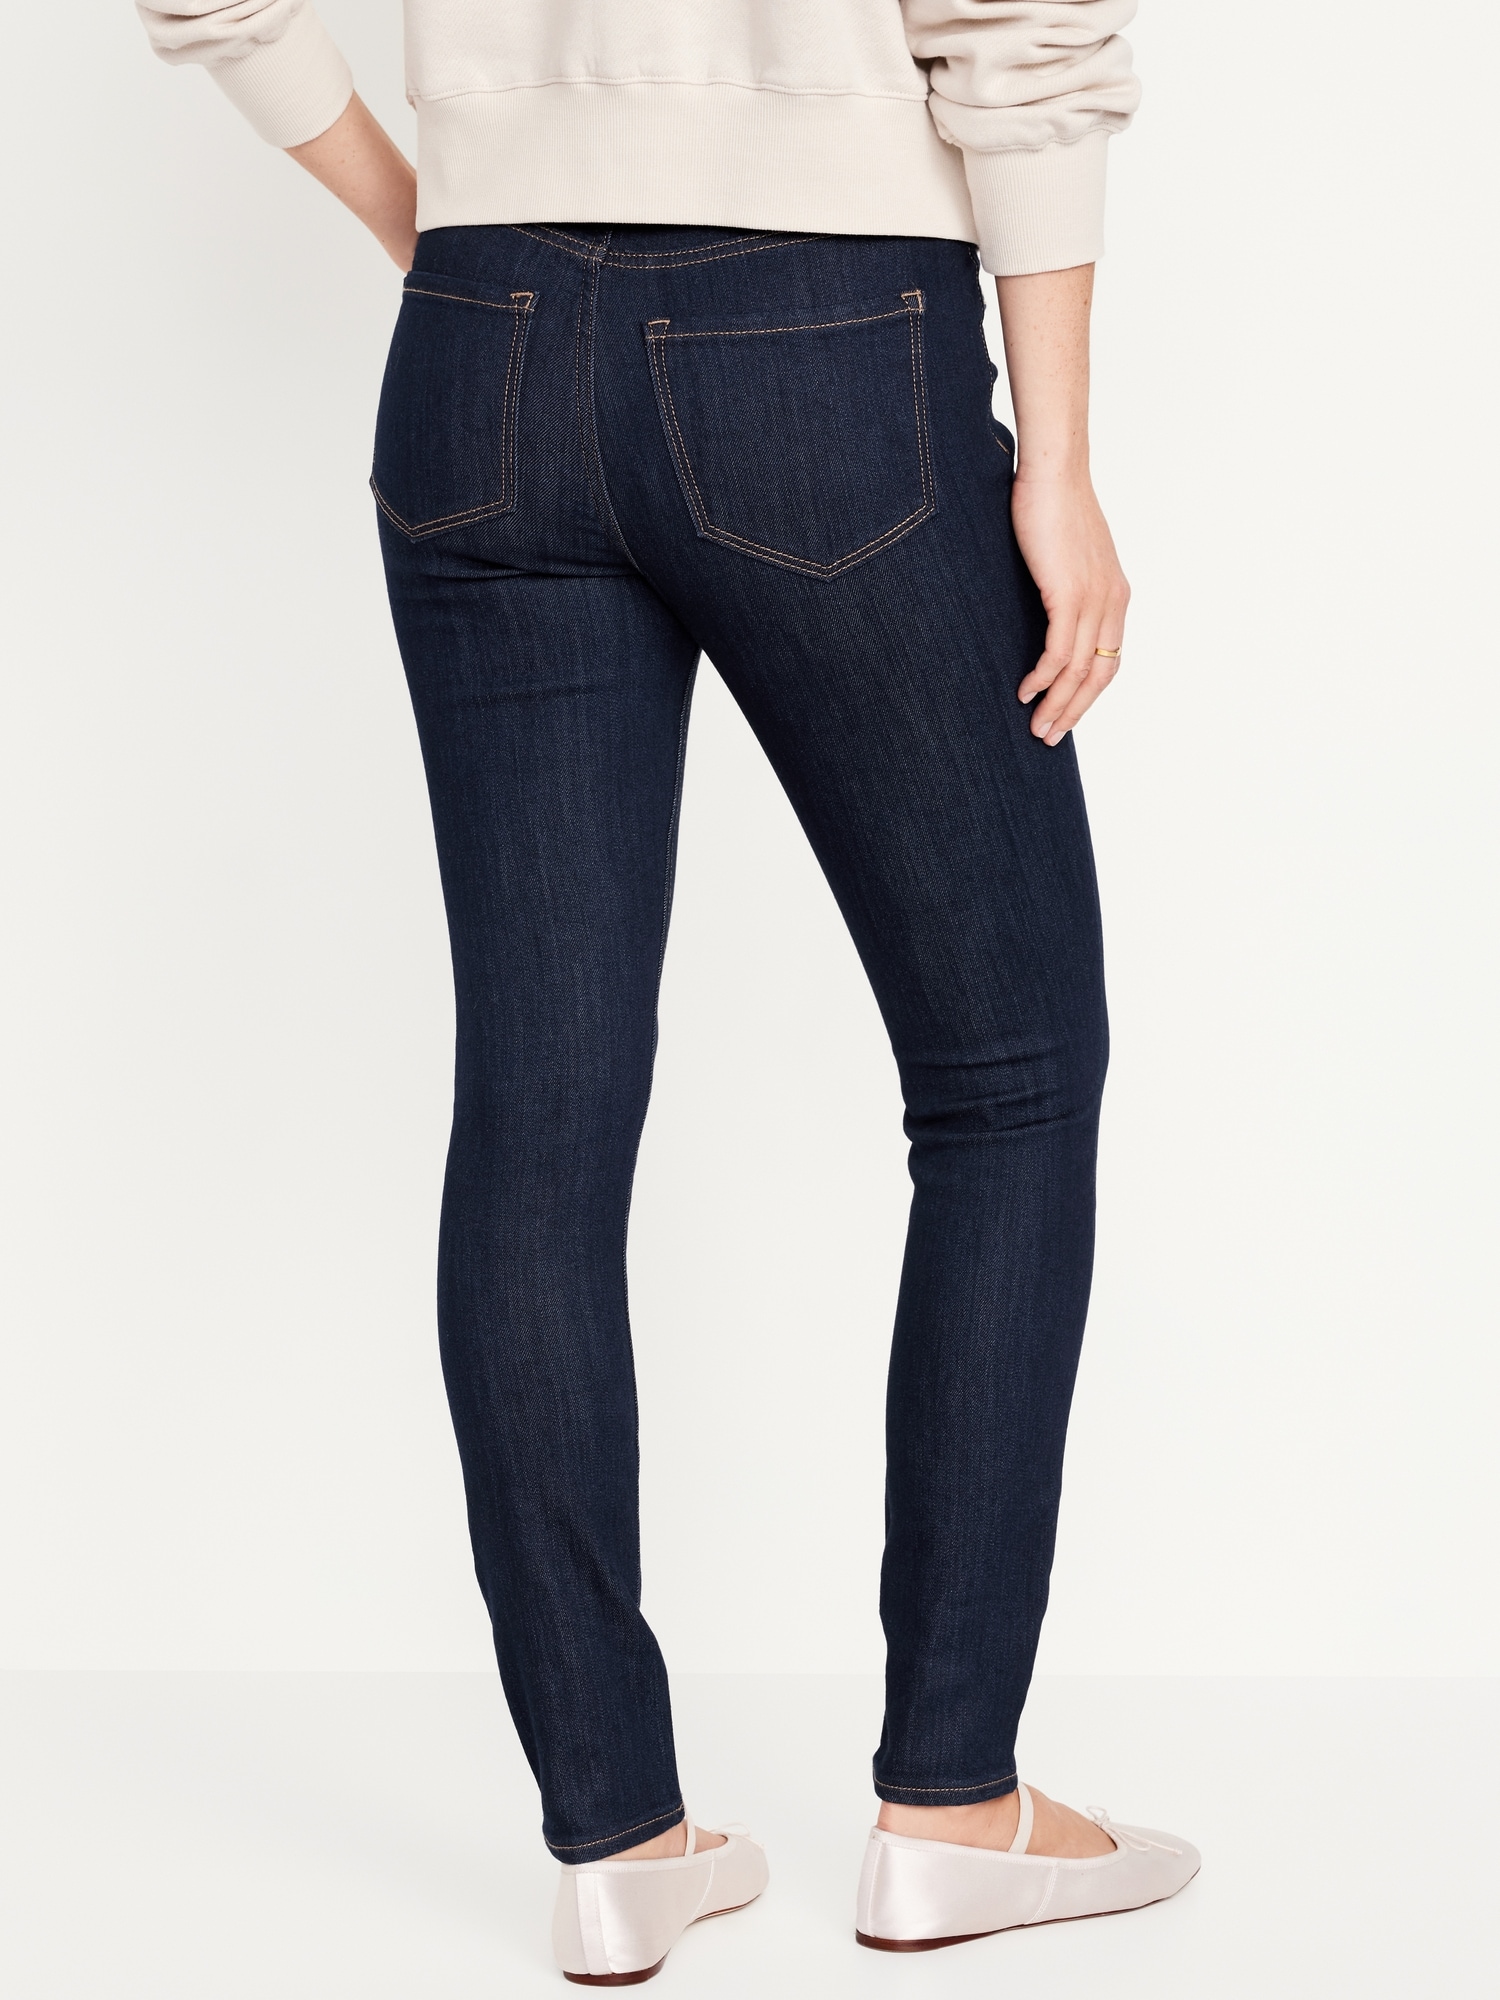 Women's Skinny Jeans & Jeggings